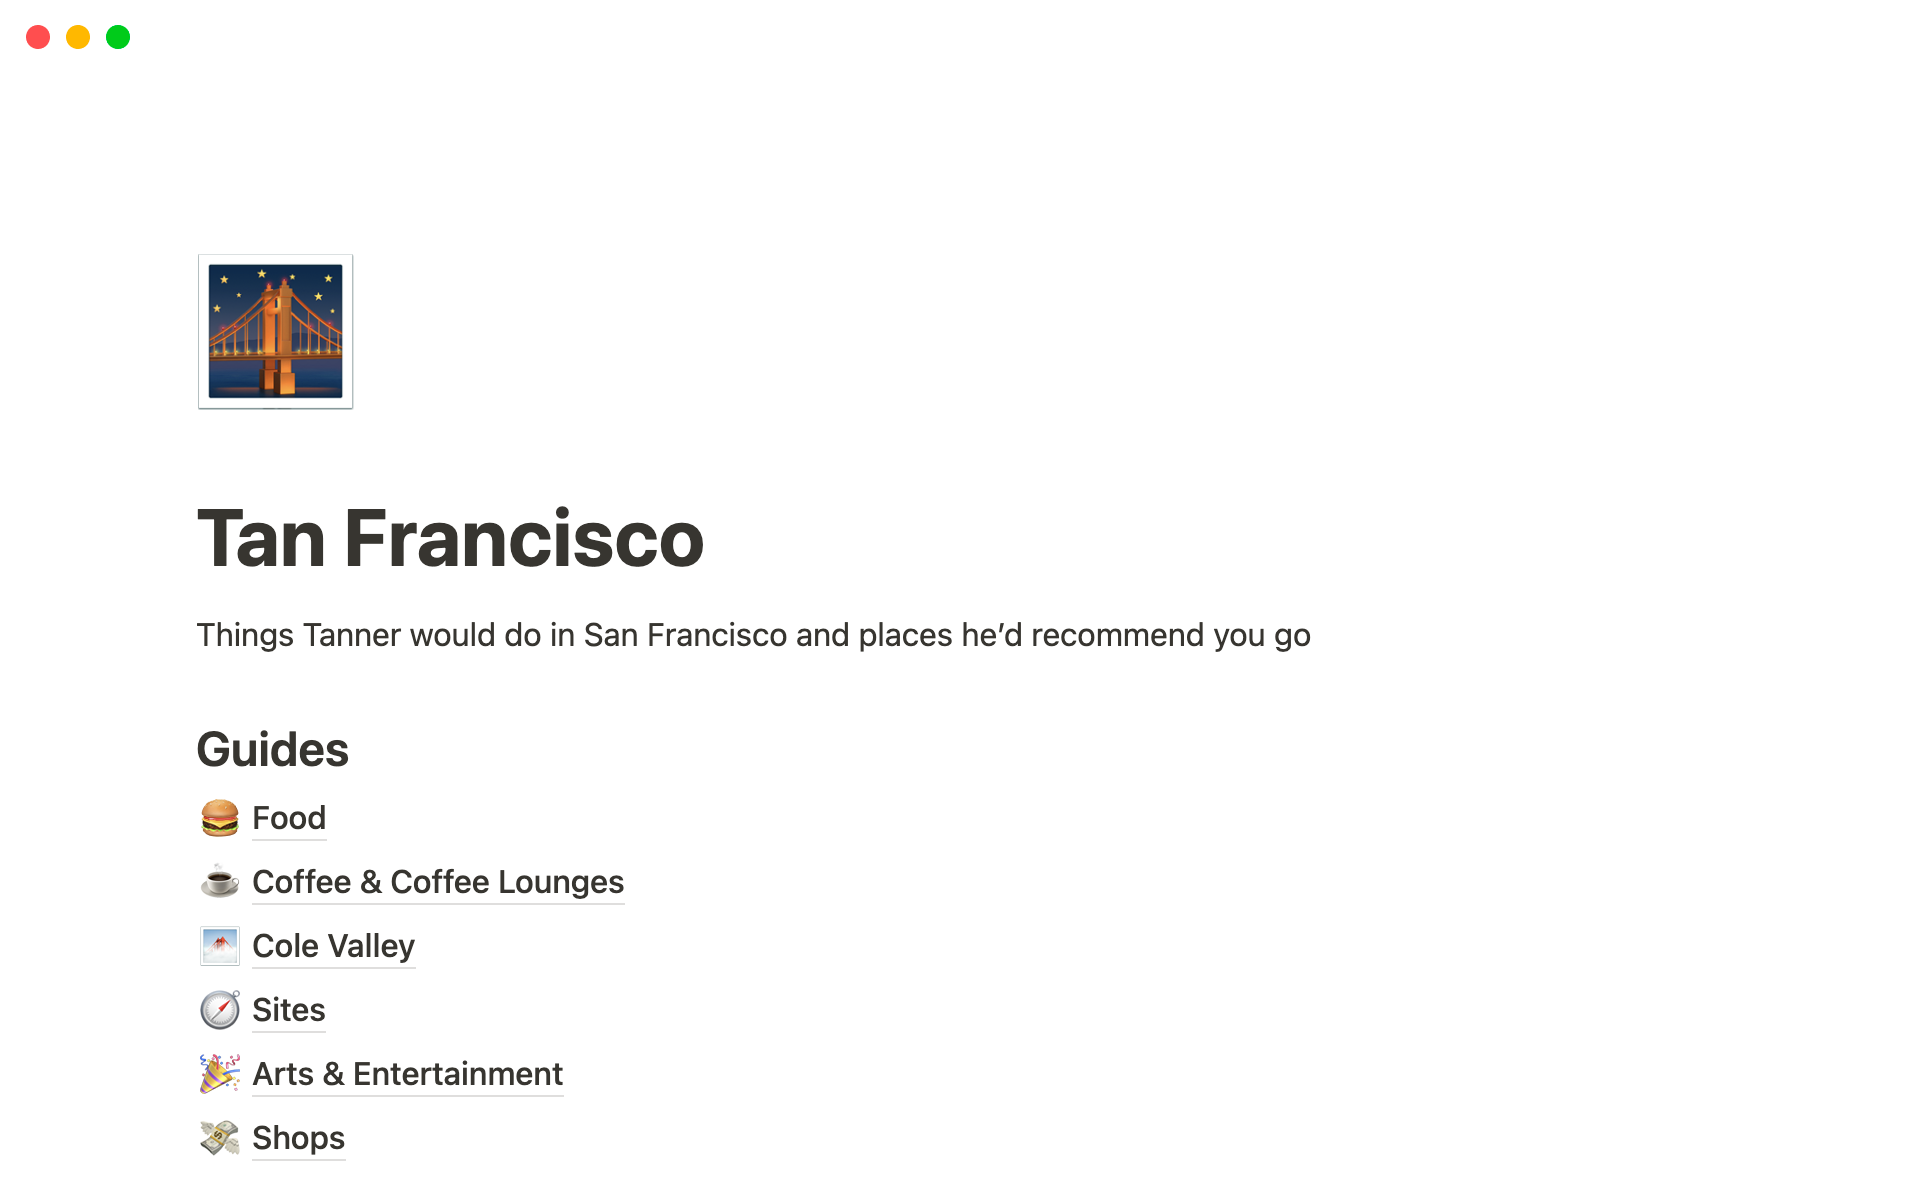 Aperçu du modèle de Tan Francisco — Tanner's Guide To San Francisco